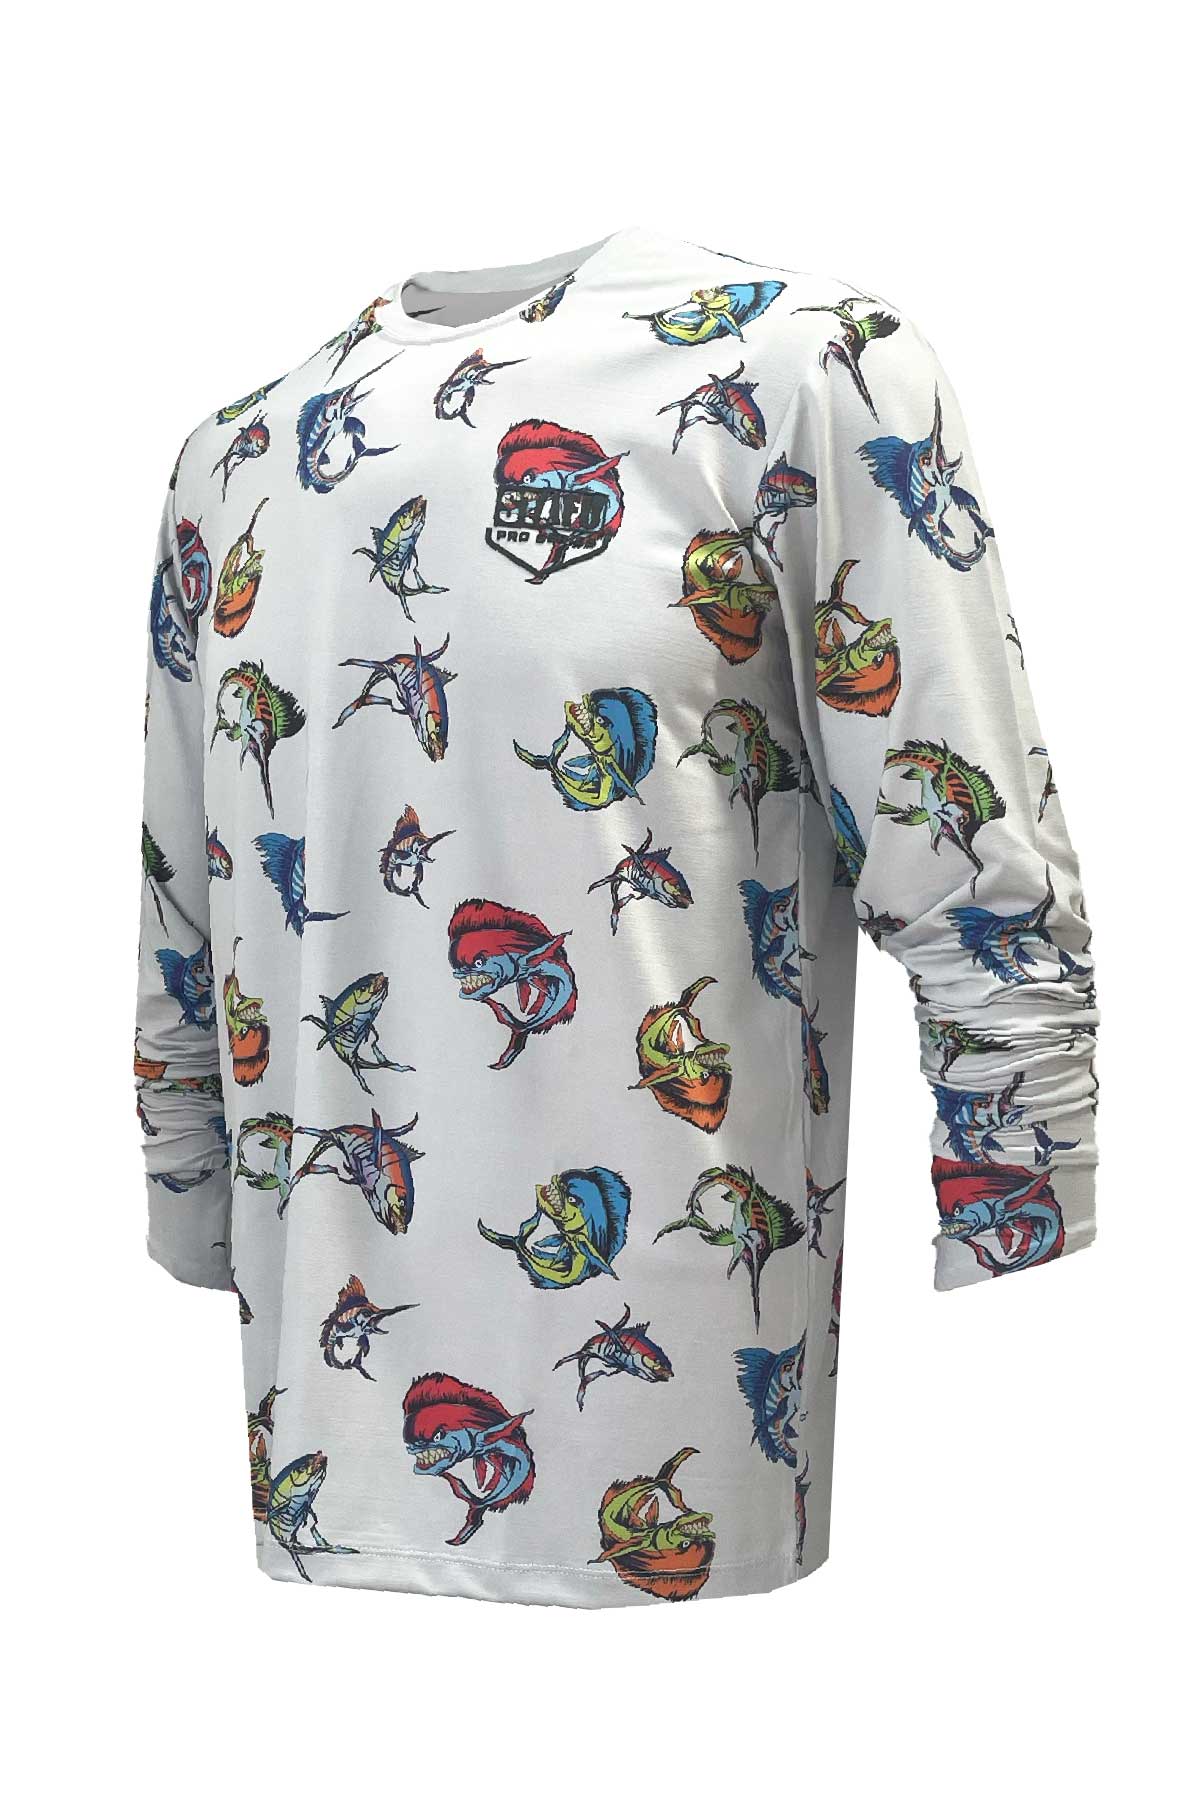 Apex v2 Long Sleeve Fishing Shirt - Cartoon - Grey